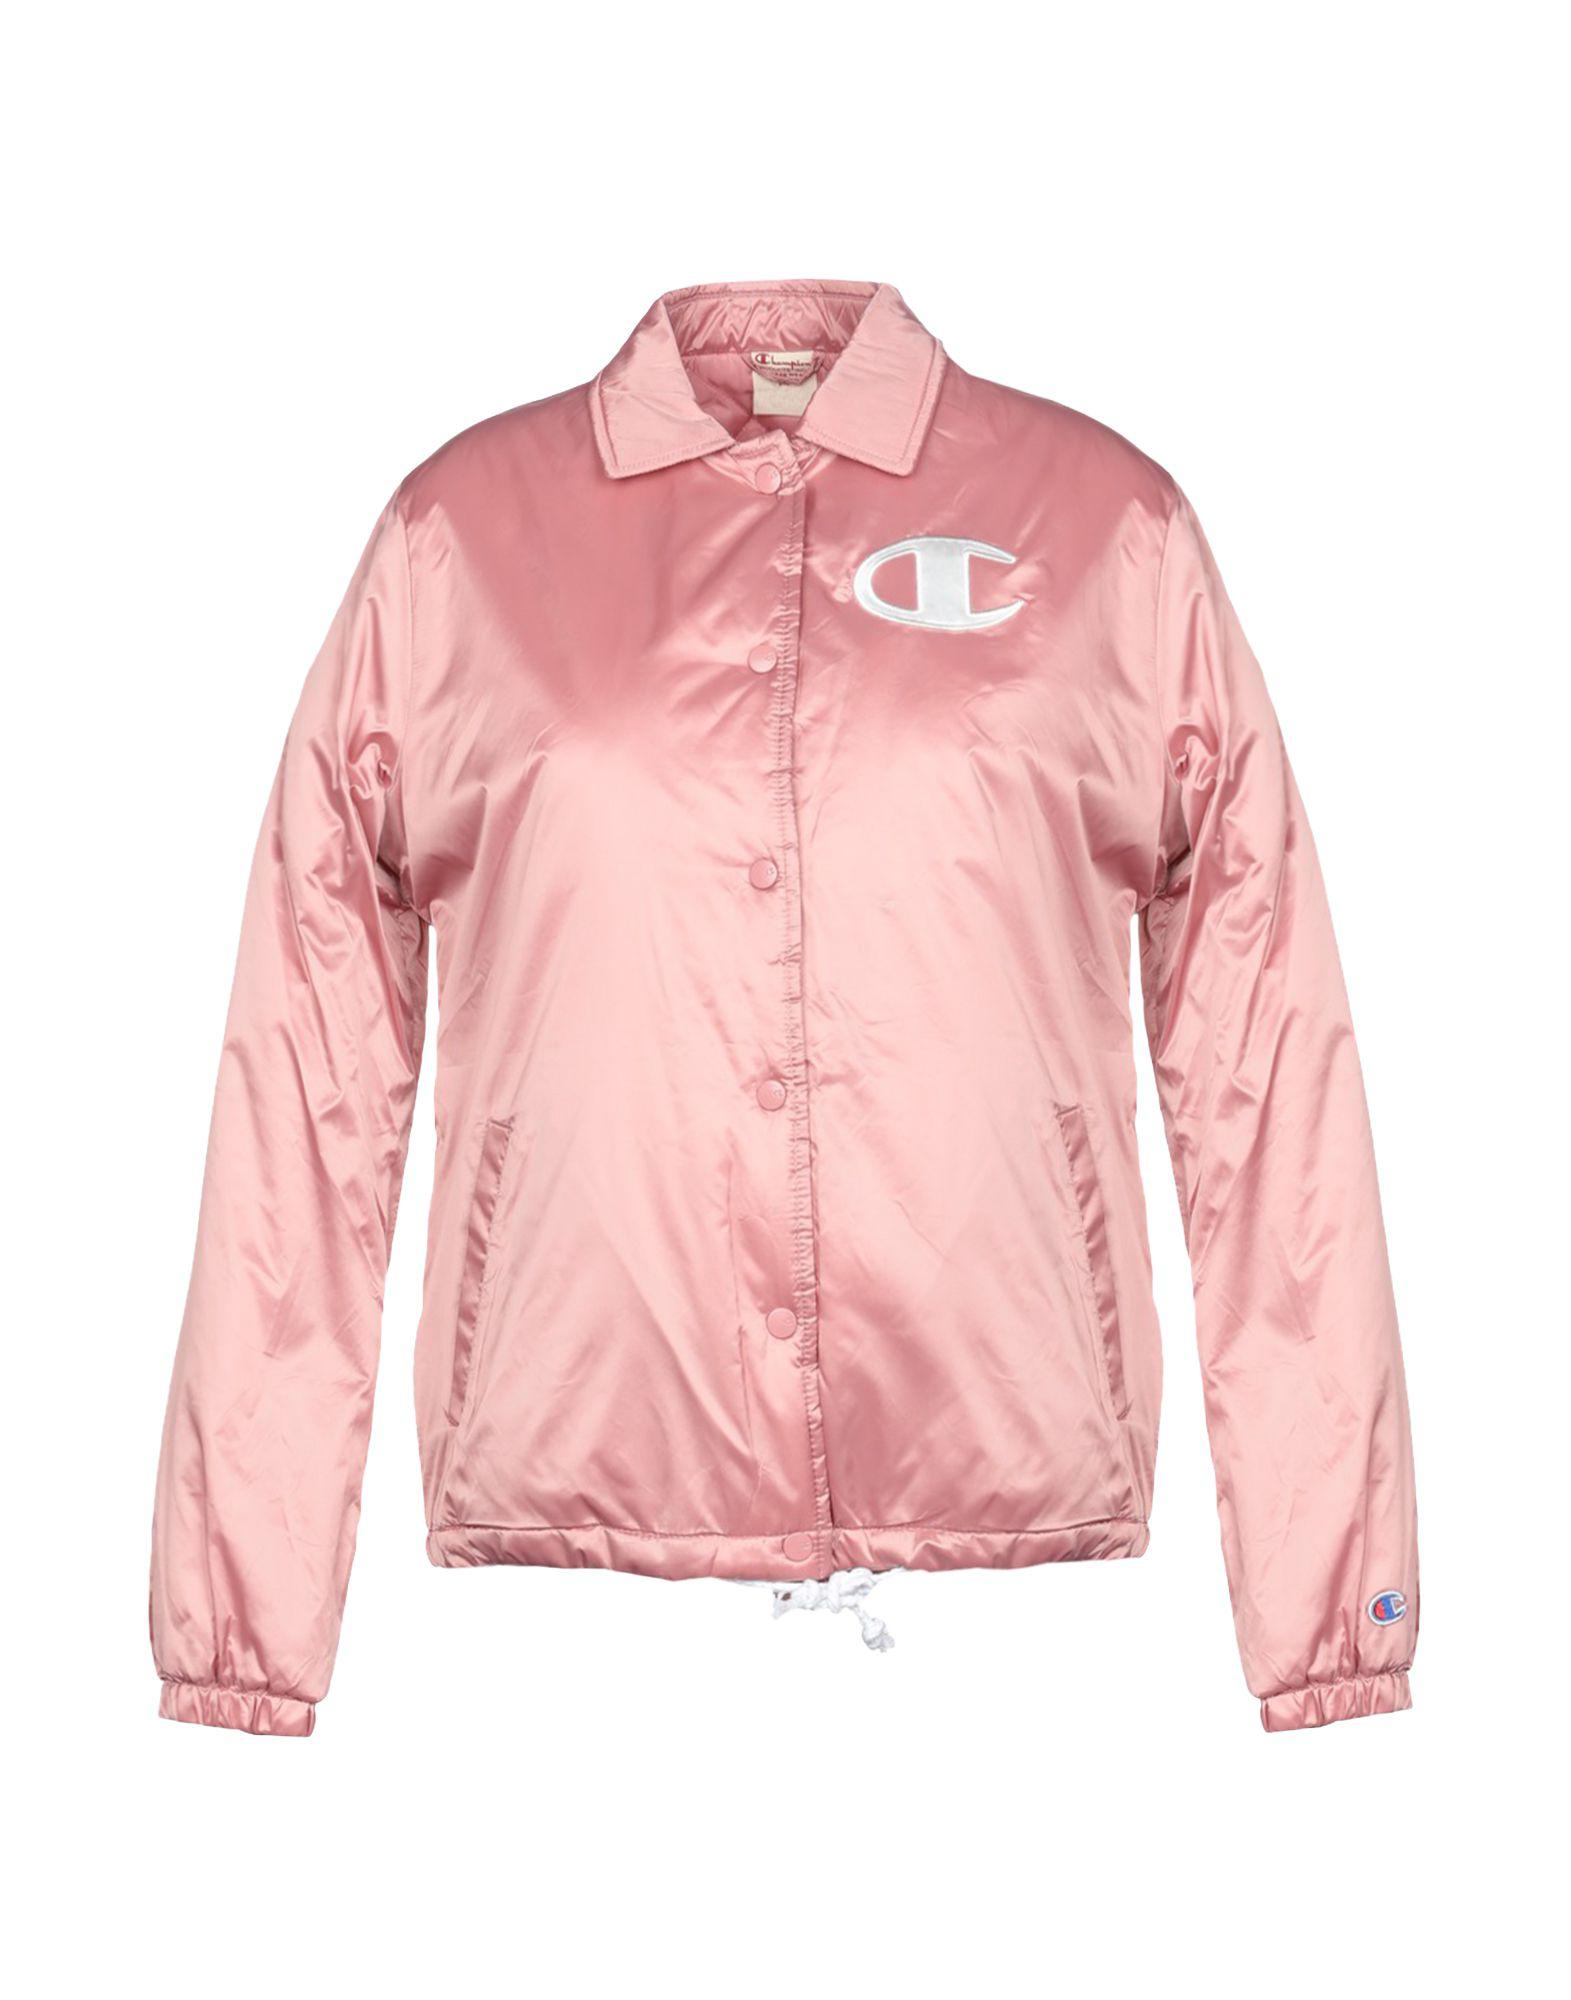 champion jacket pink